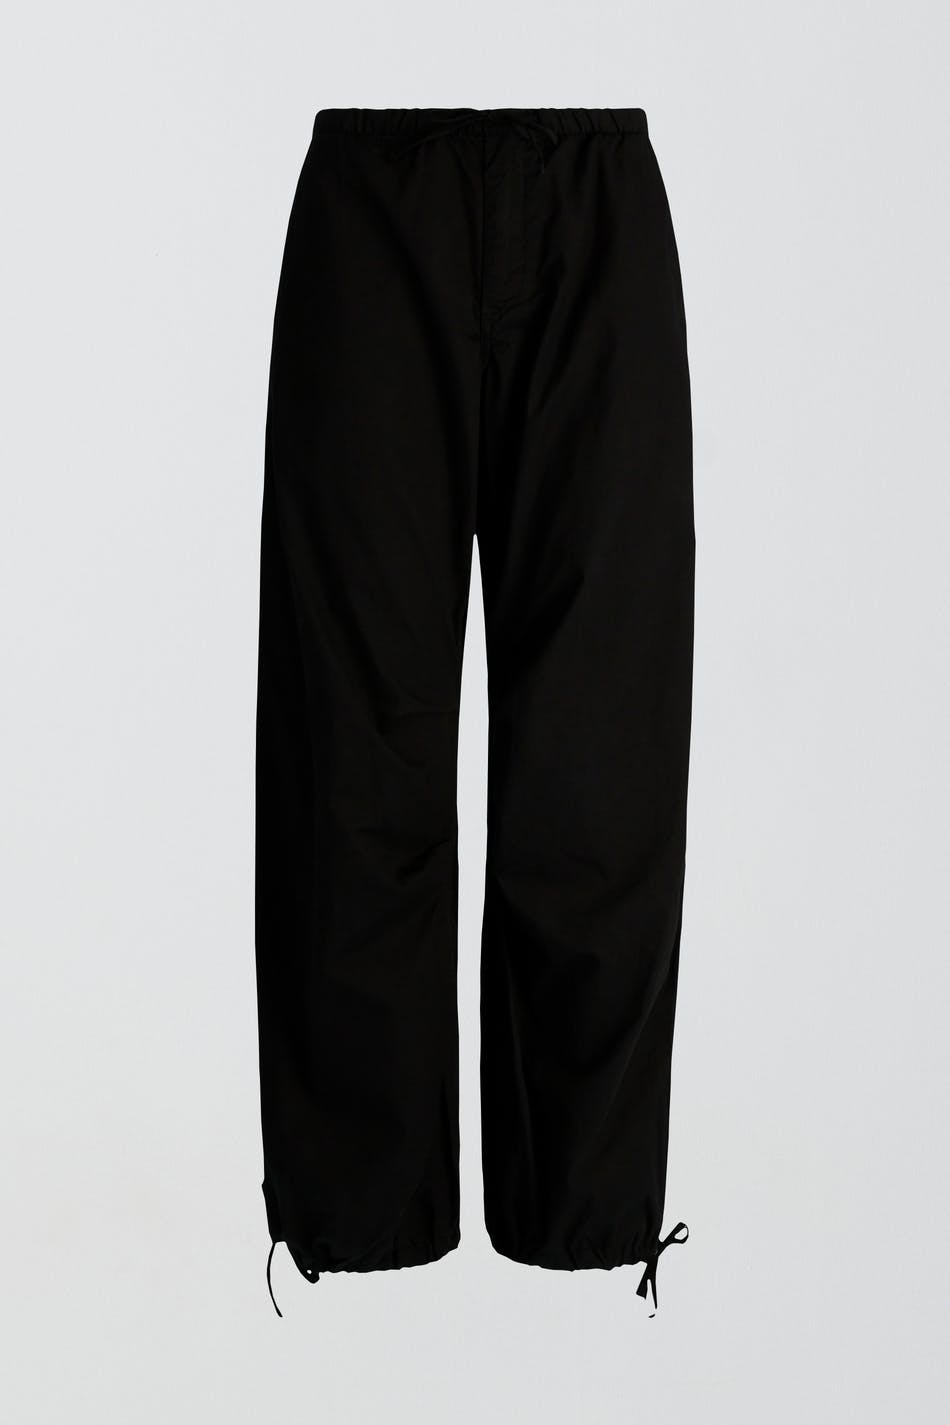 Parachute petite trousers - Gina Tricot - parachute-pants - Black - XS - Female